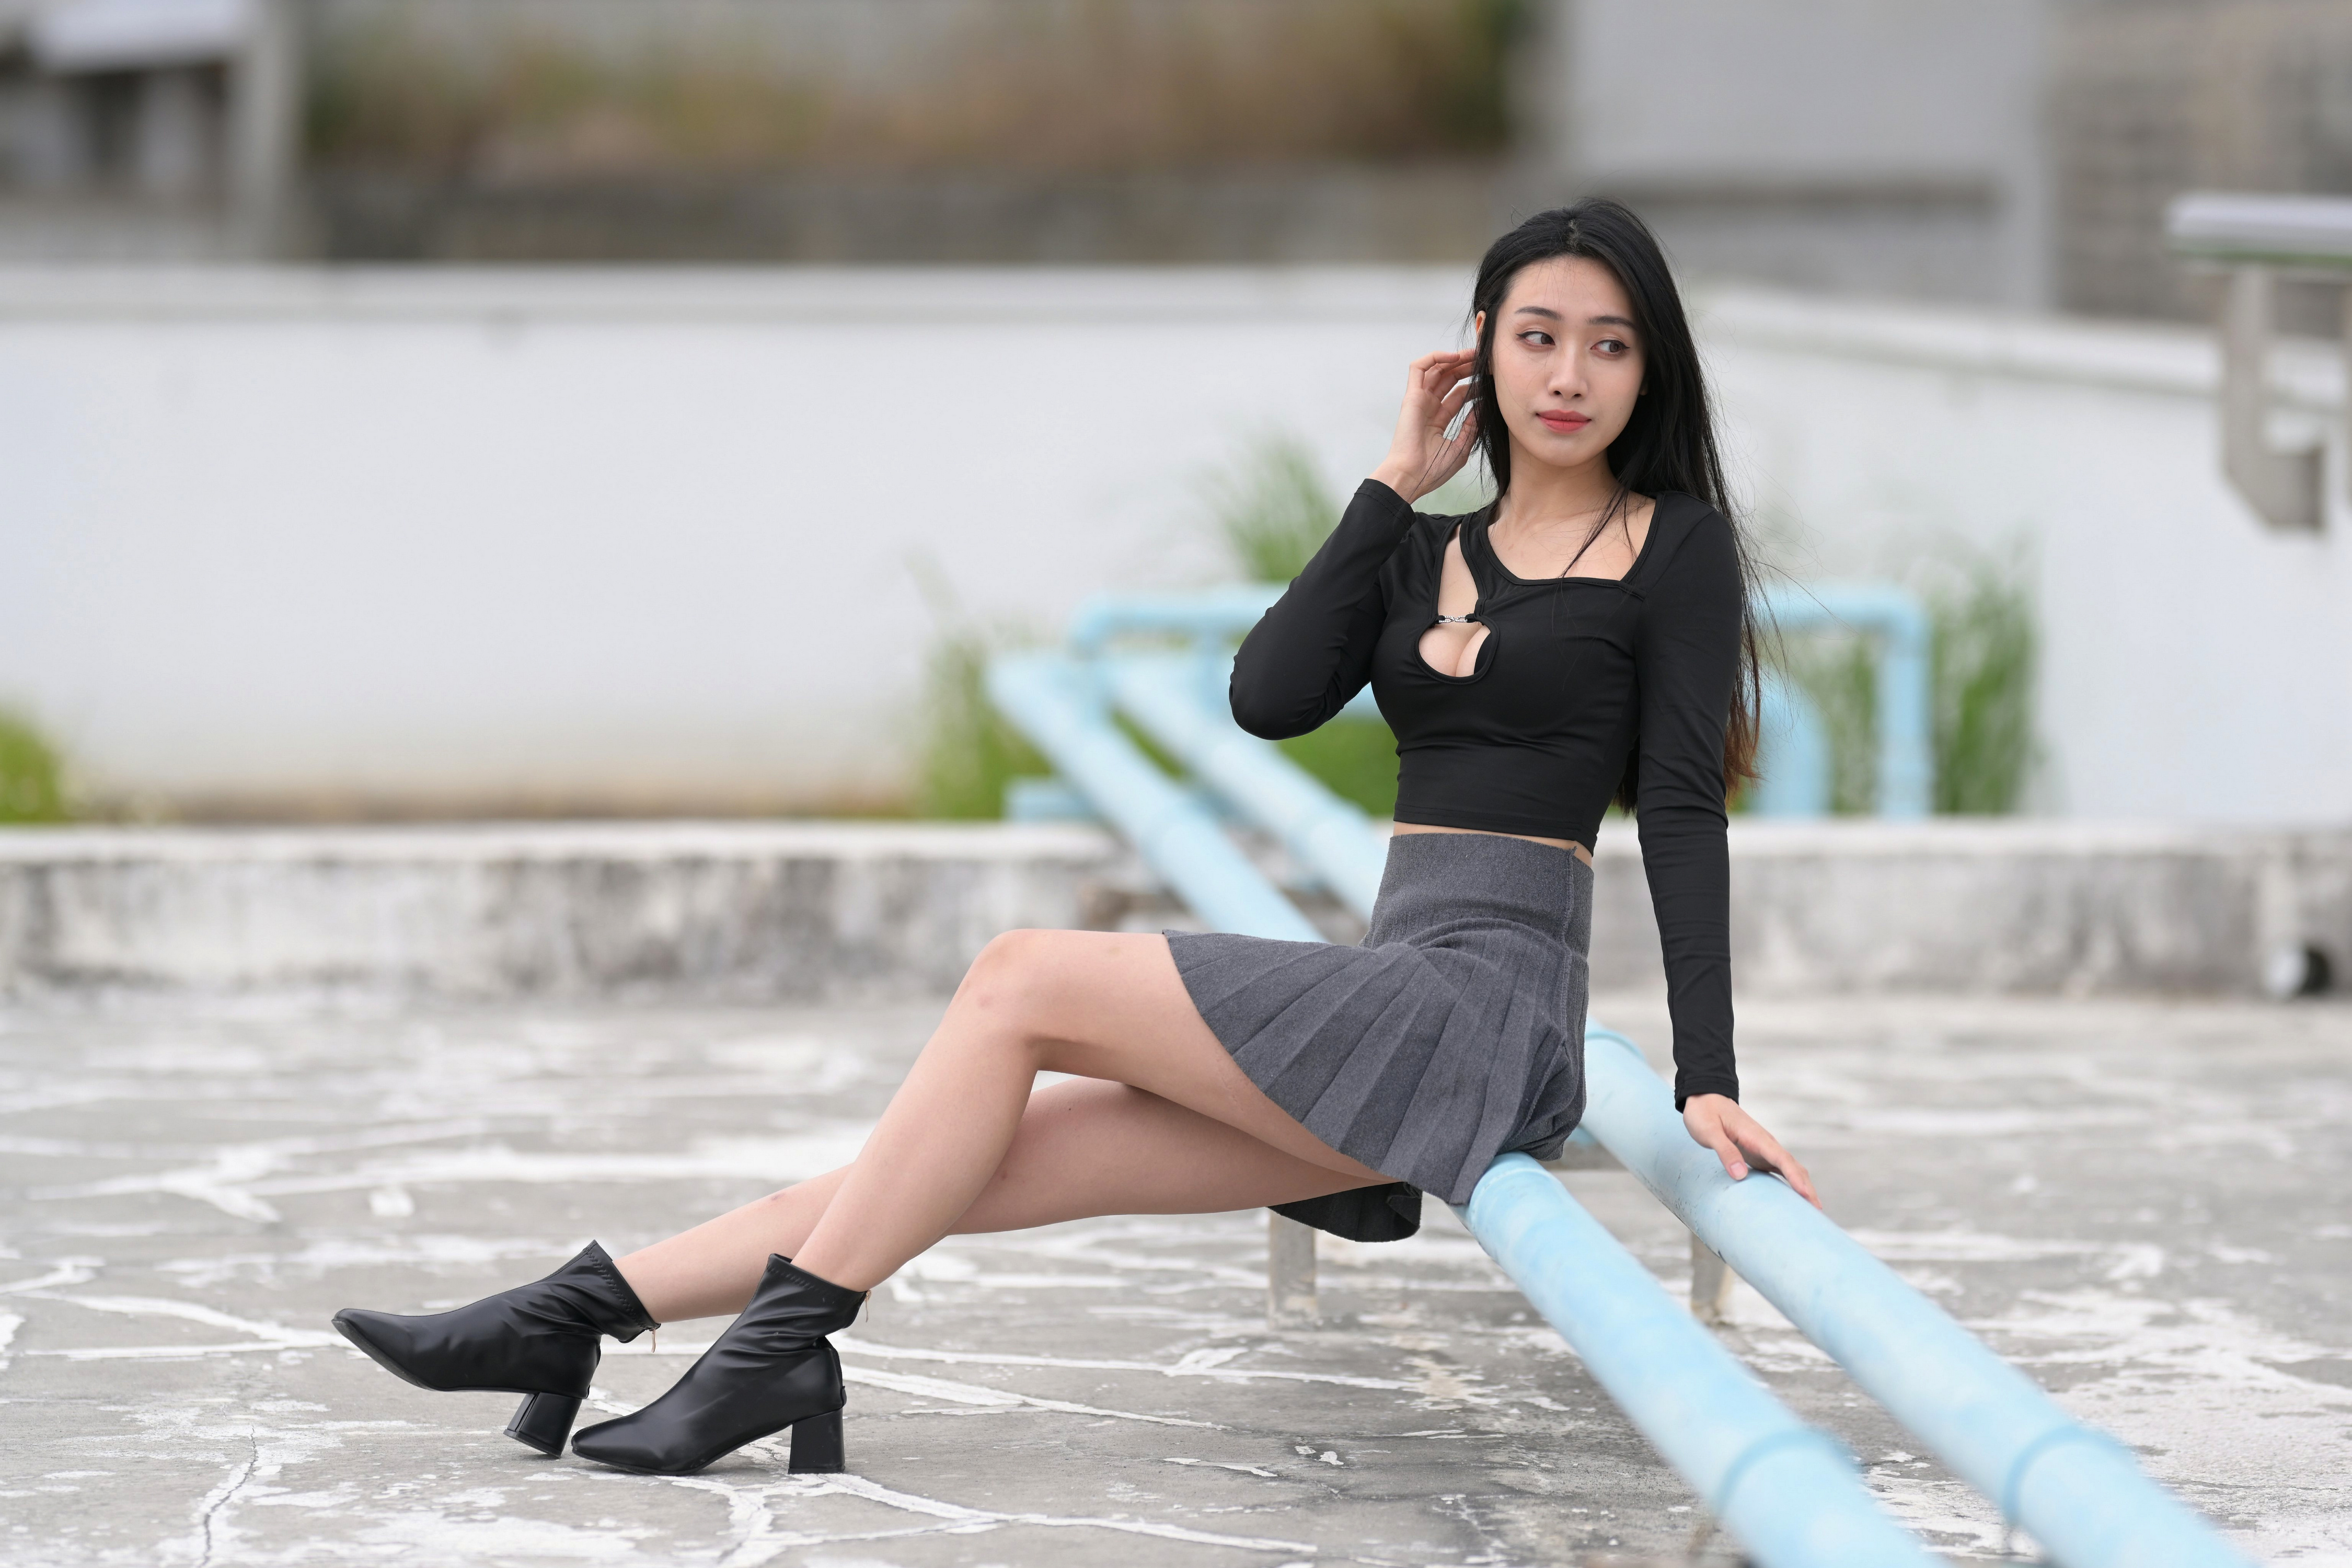 Asian Model Women Long Hair Dark Hair Sitting Bench 4500x3000